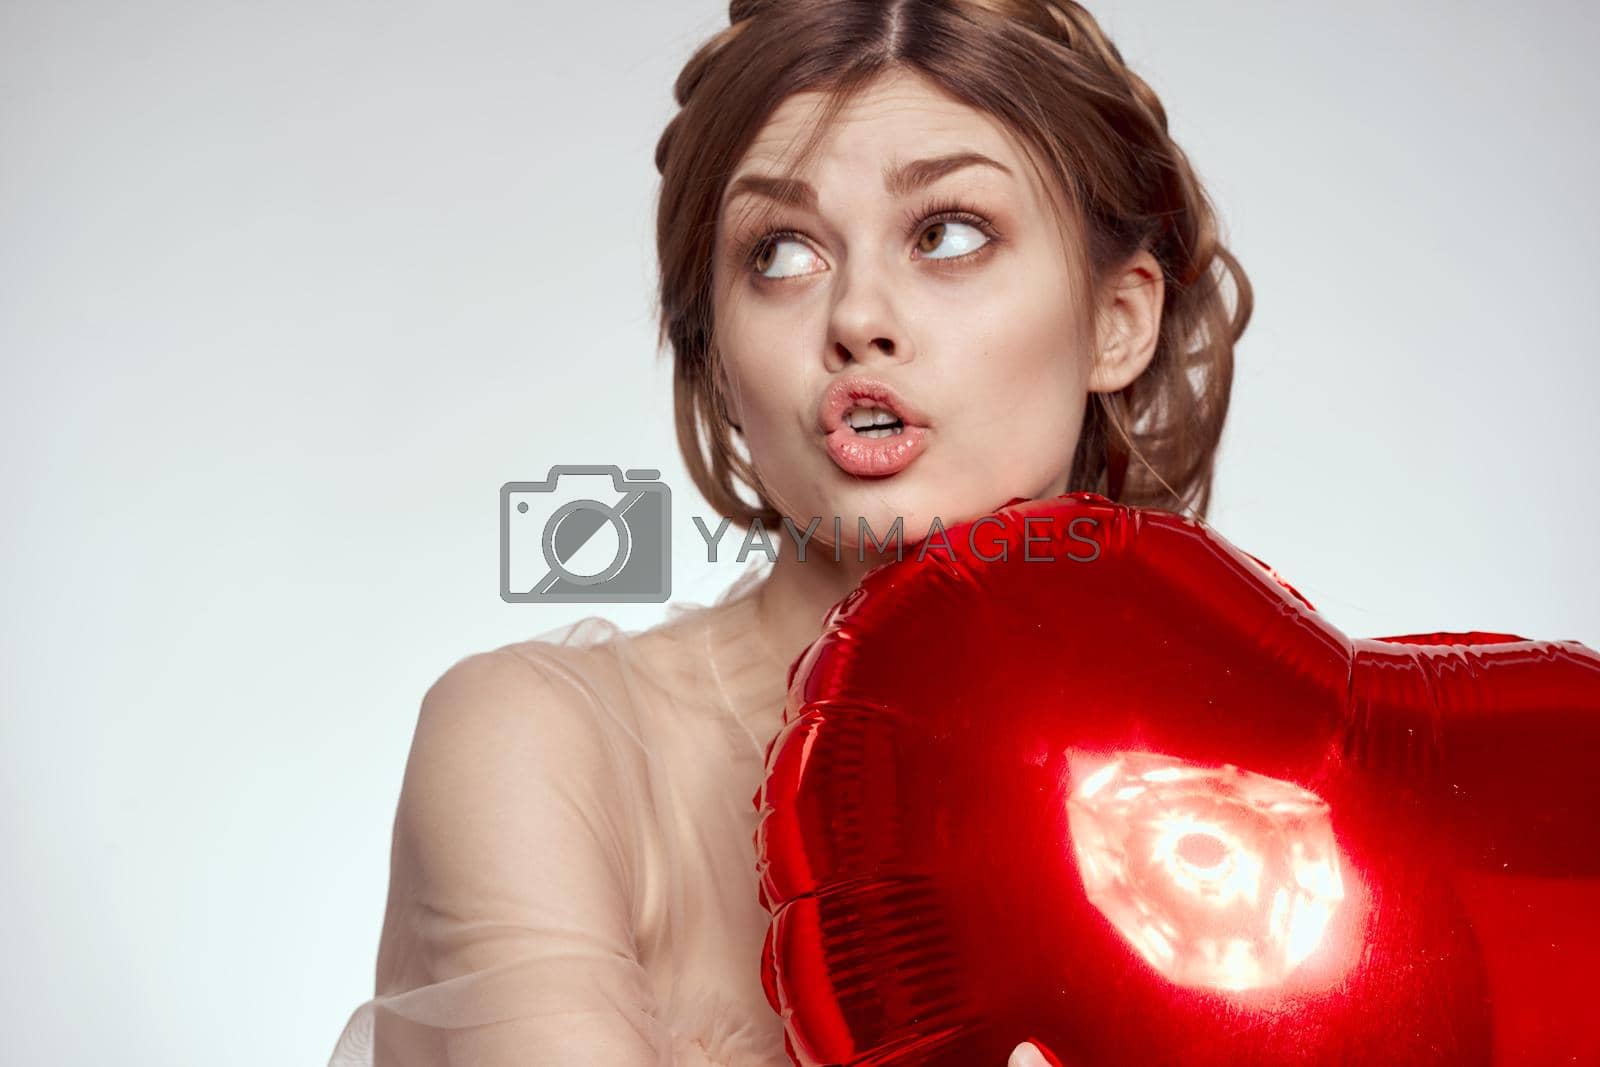 pretty woman heart balloon posing romance holiday. High quality photo